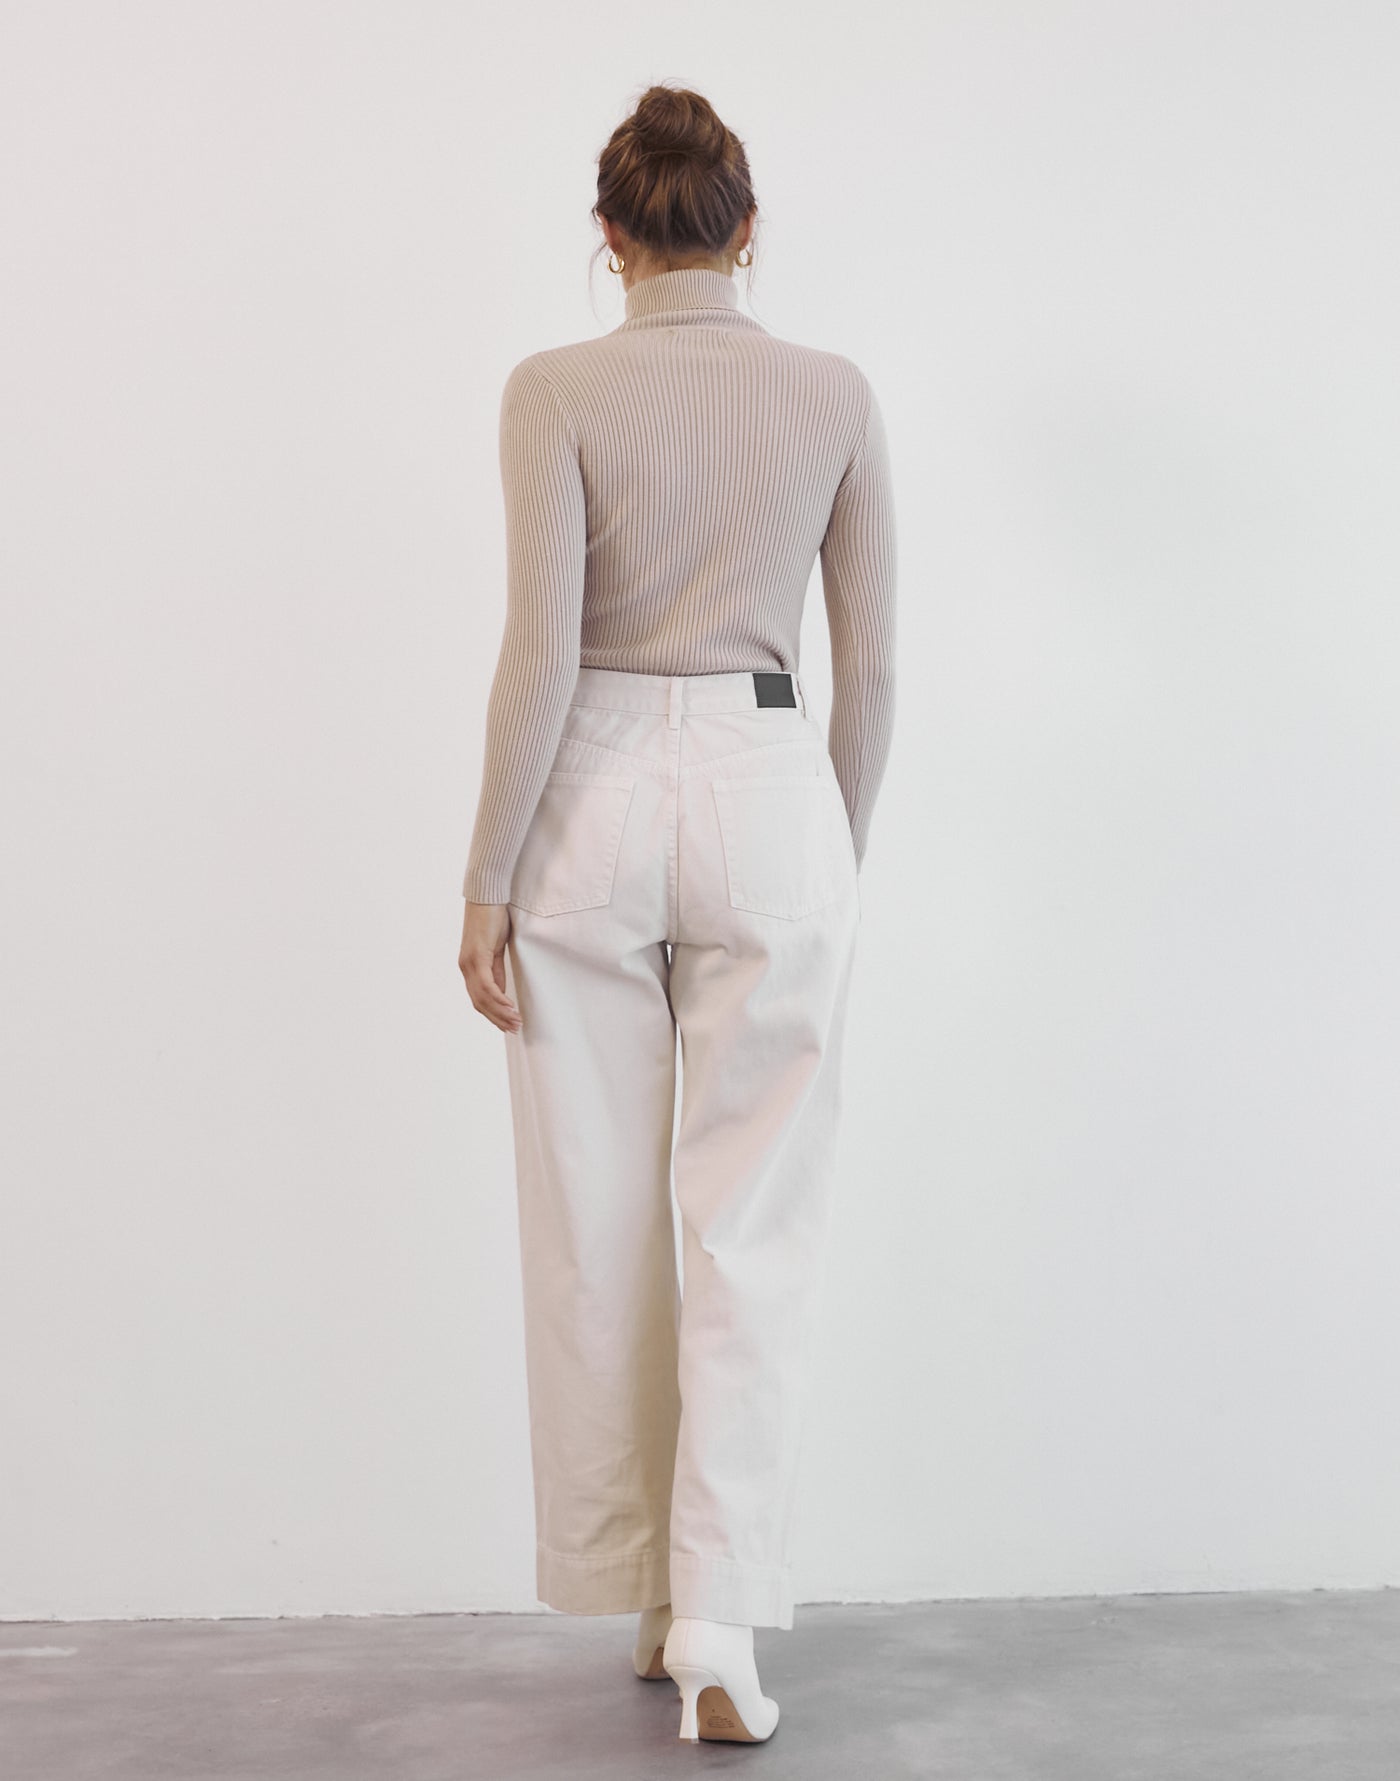 Davison Long Sleeve Knit Top (Beige) - Turtleneck Long Sleeve Knit Top - Women's Top - Charcoal Clothing